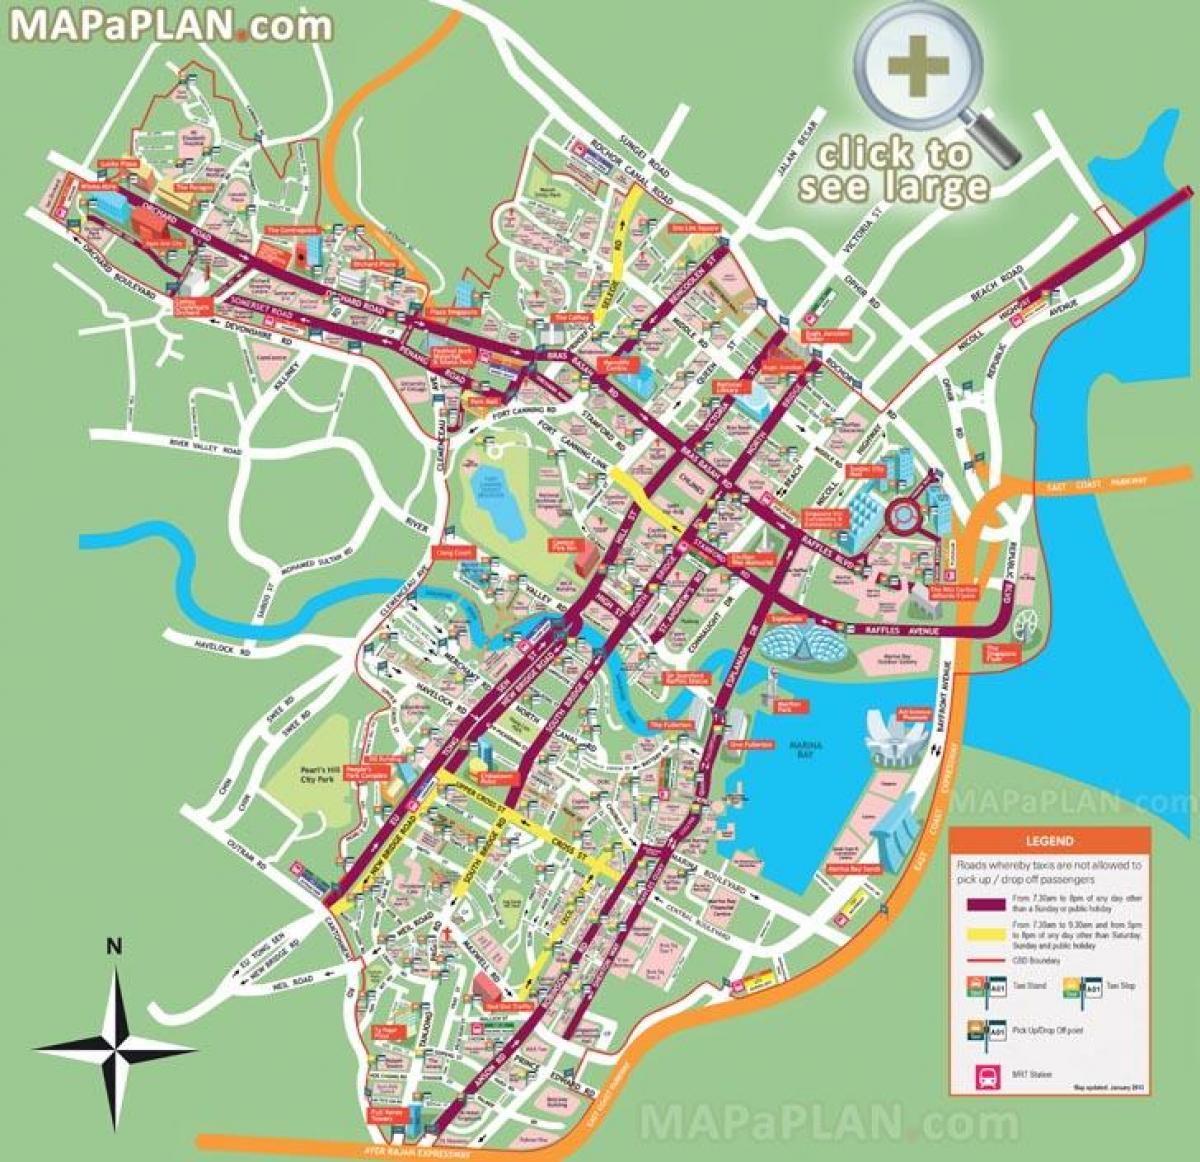 Sg地図 地図のシンガポール市 シンガポール共和国